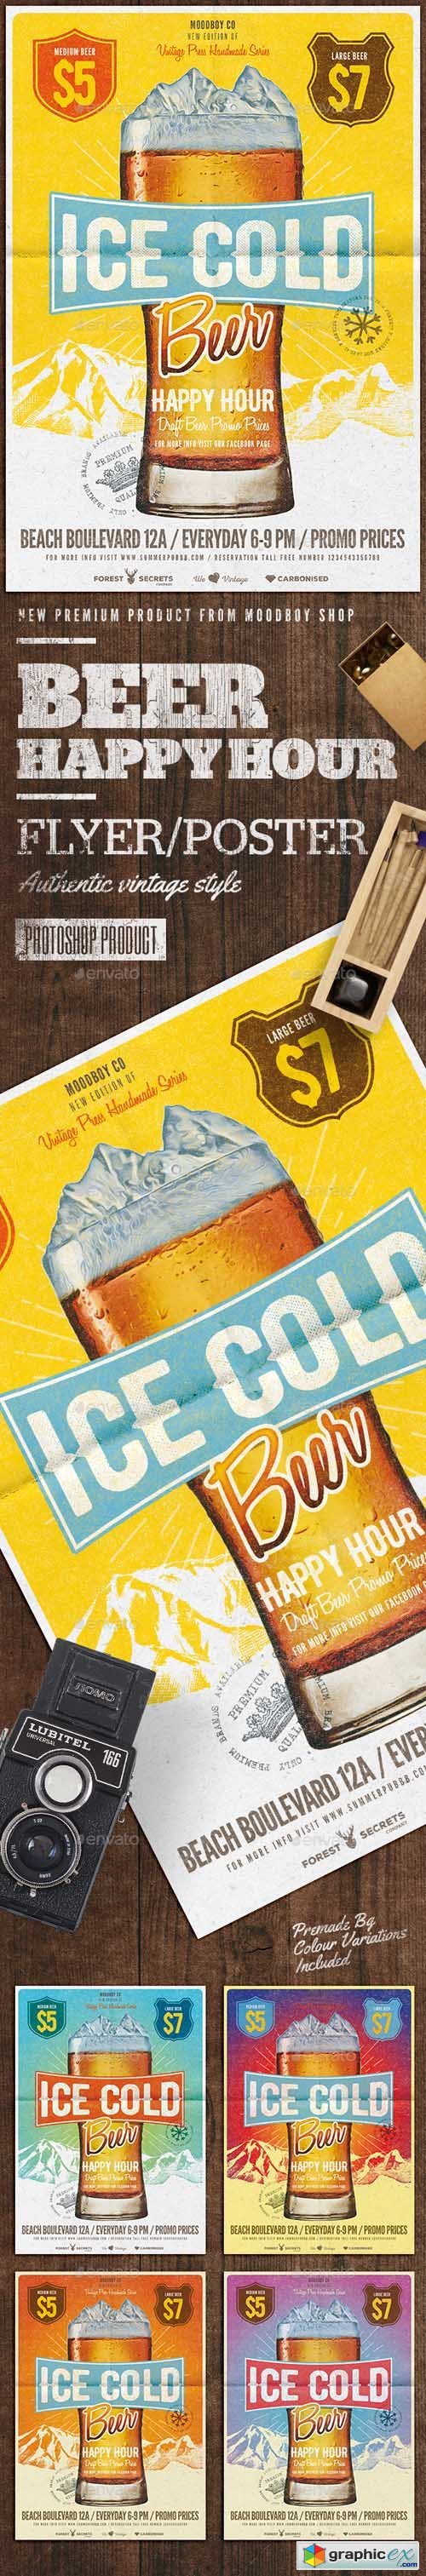 Cold Beer Happy Hour Flyer/Poster